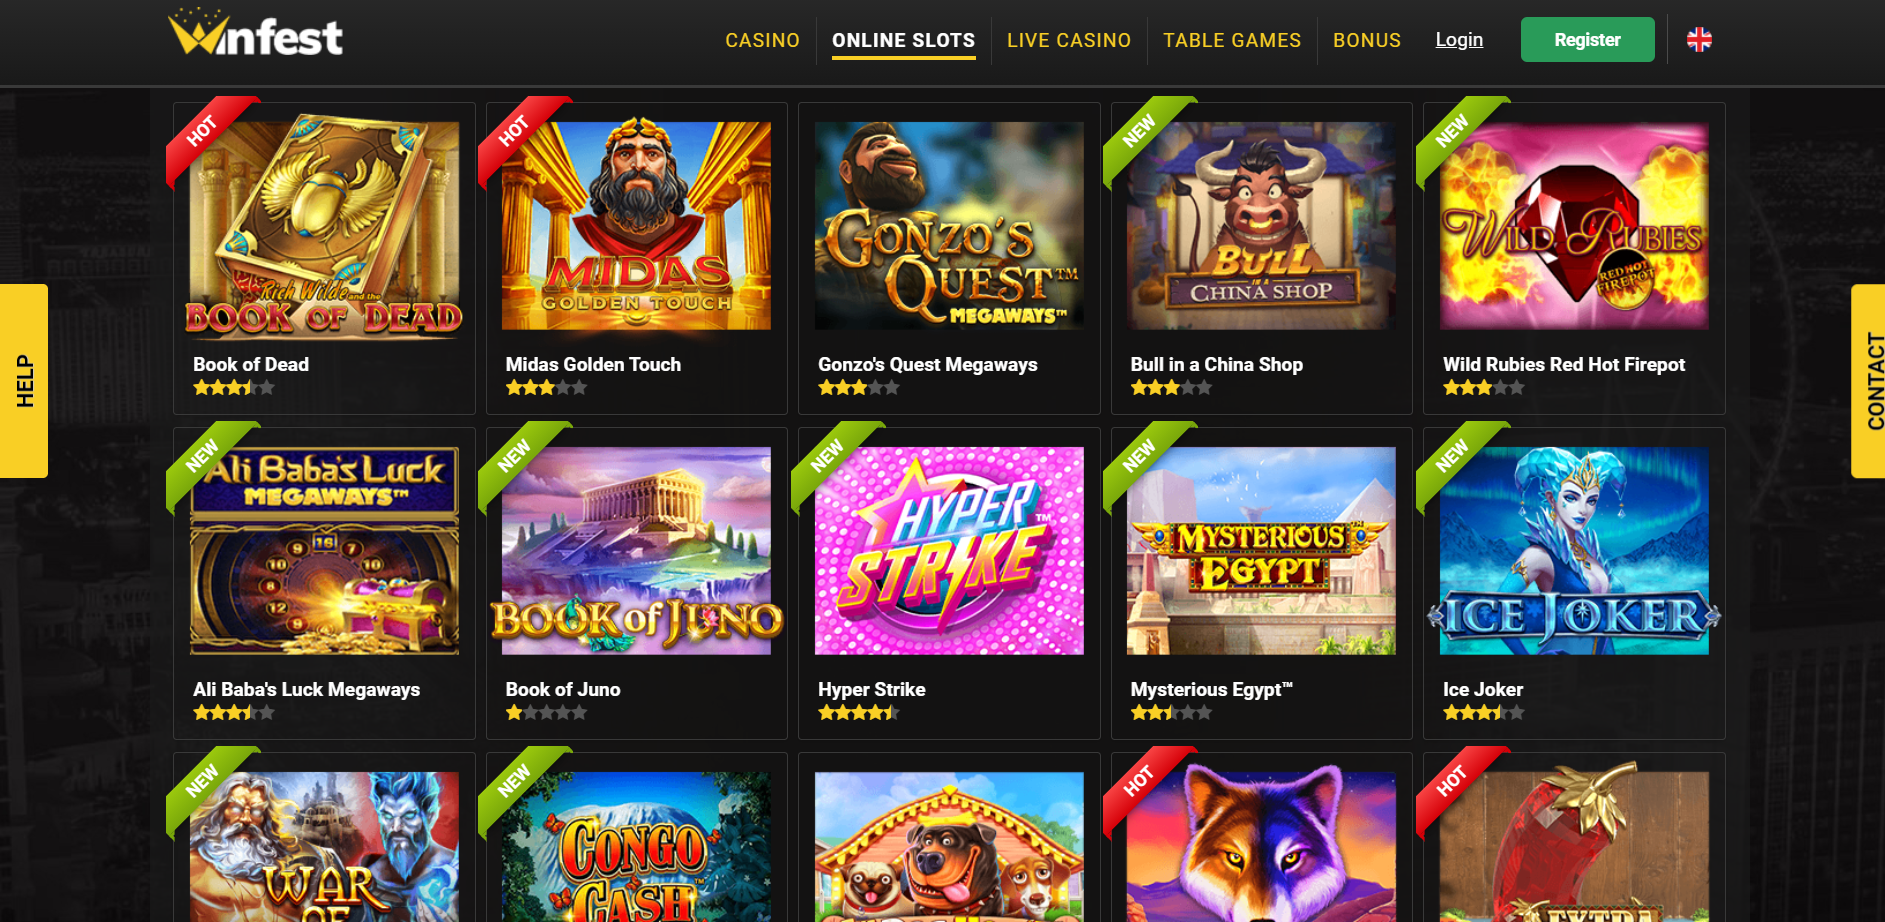 Winfest Casino Games